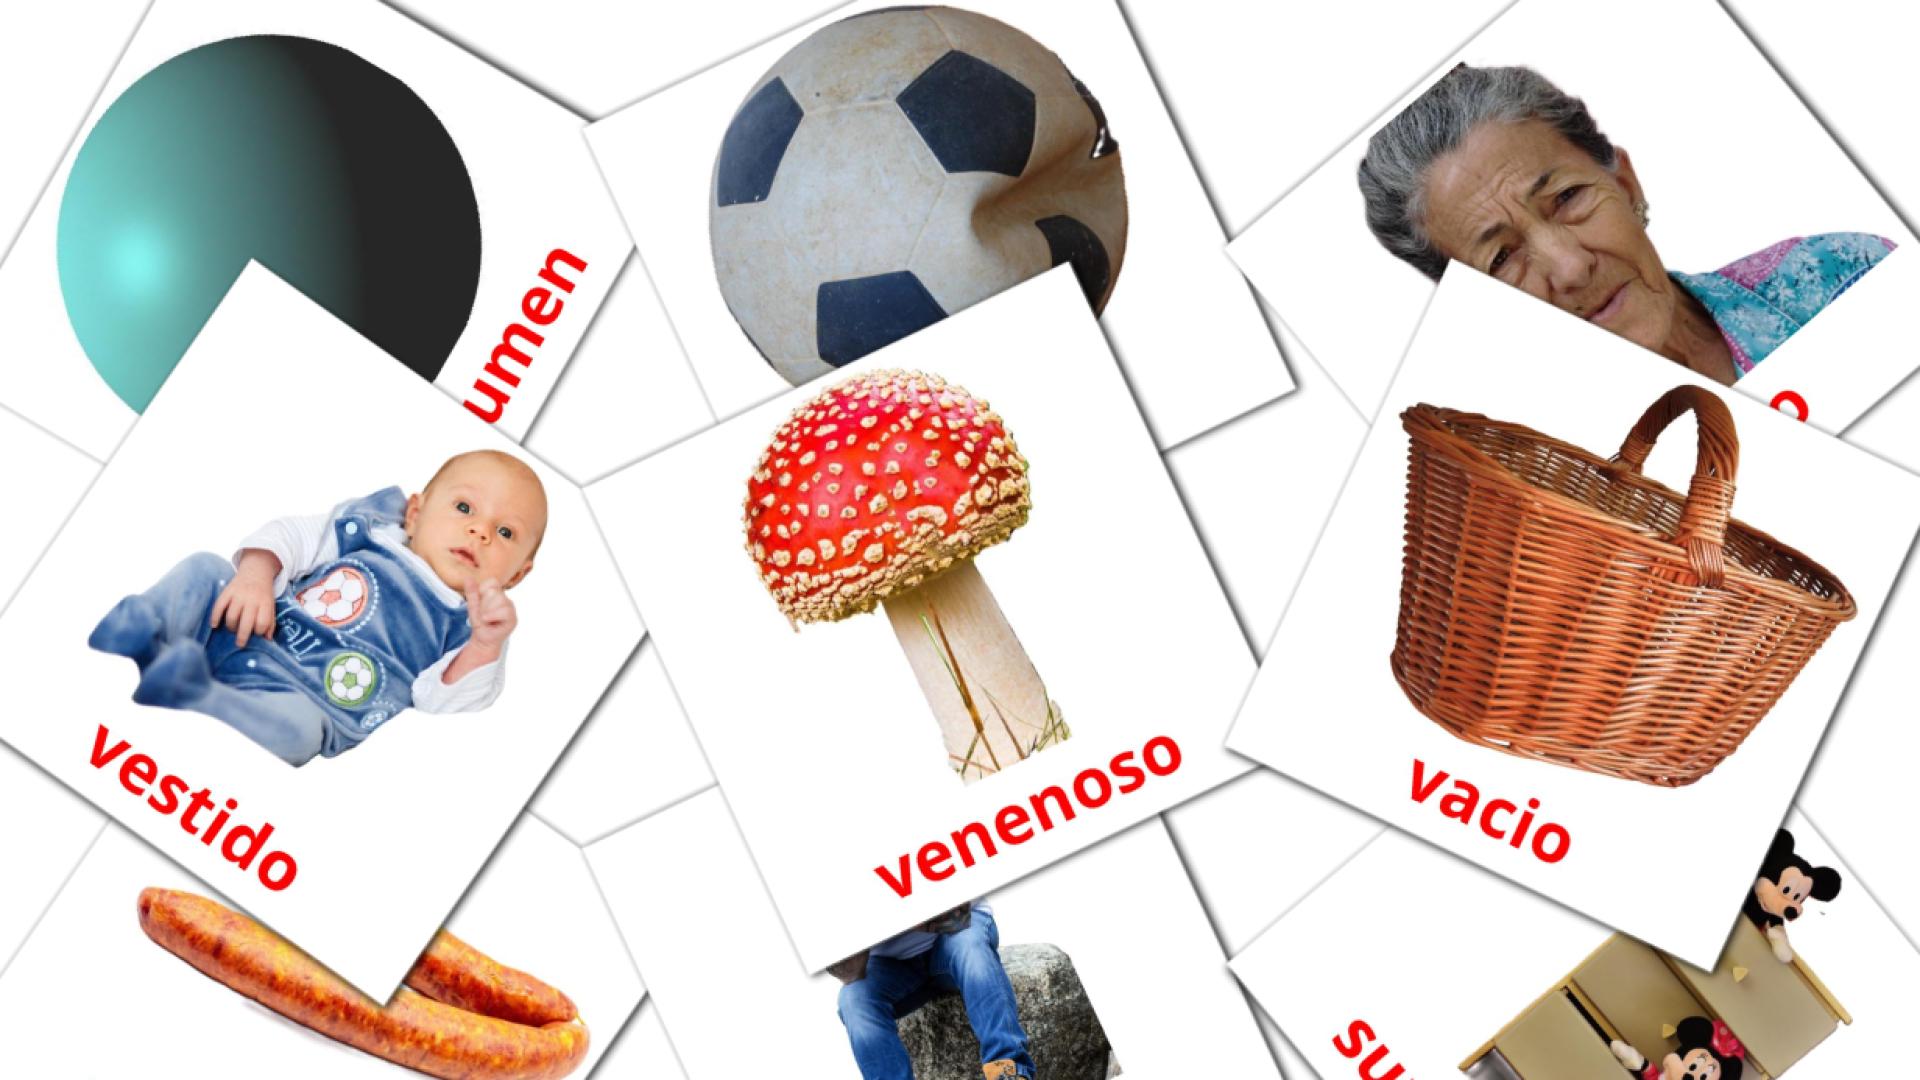 Spanisch Adjetivos e Vokabelkarteikarten